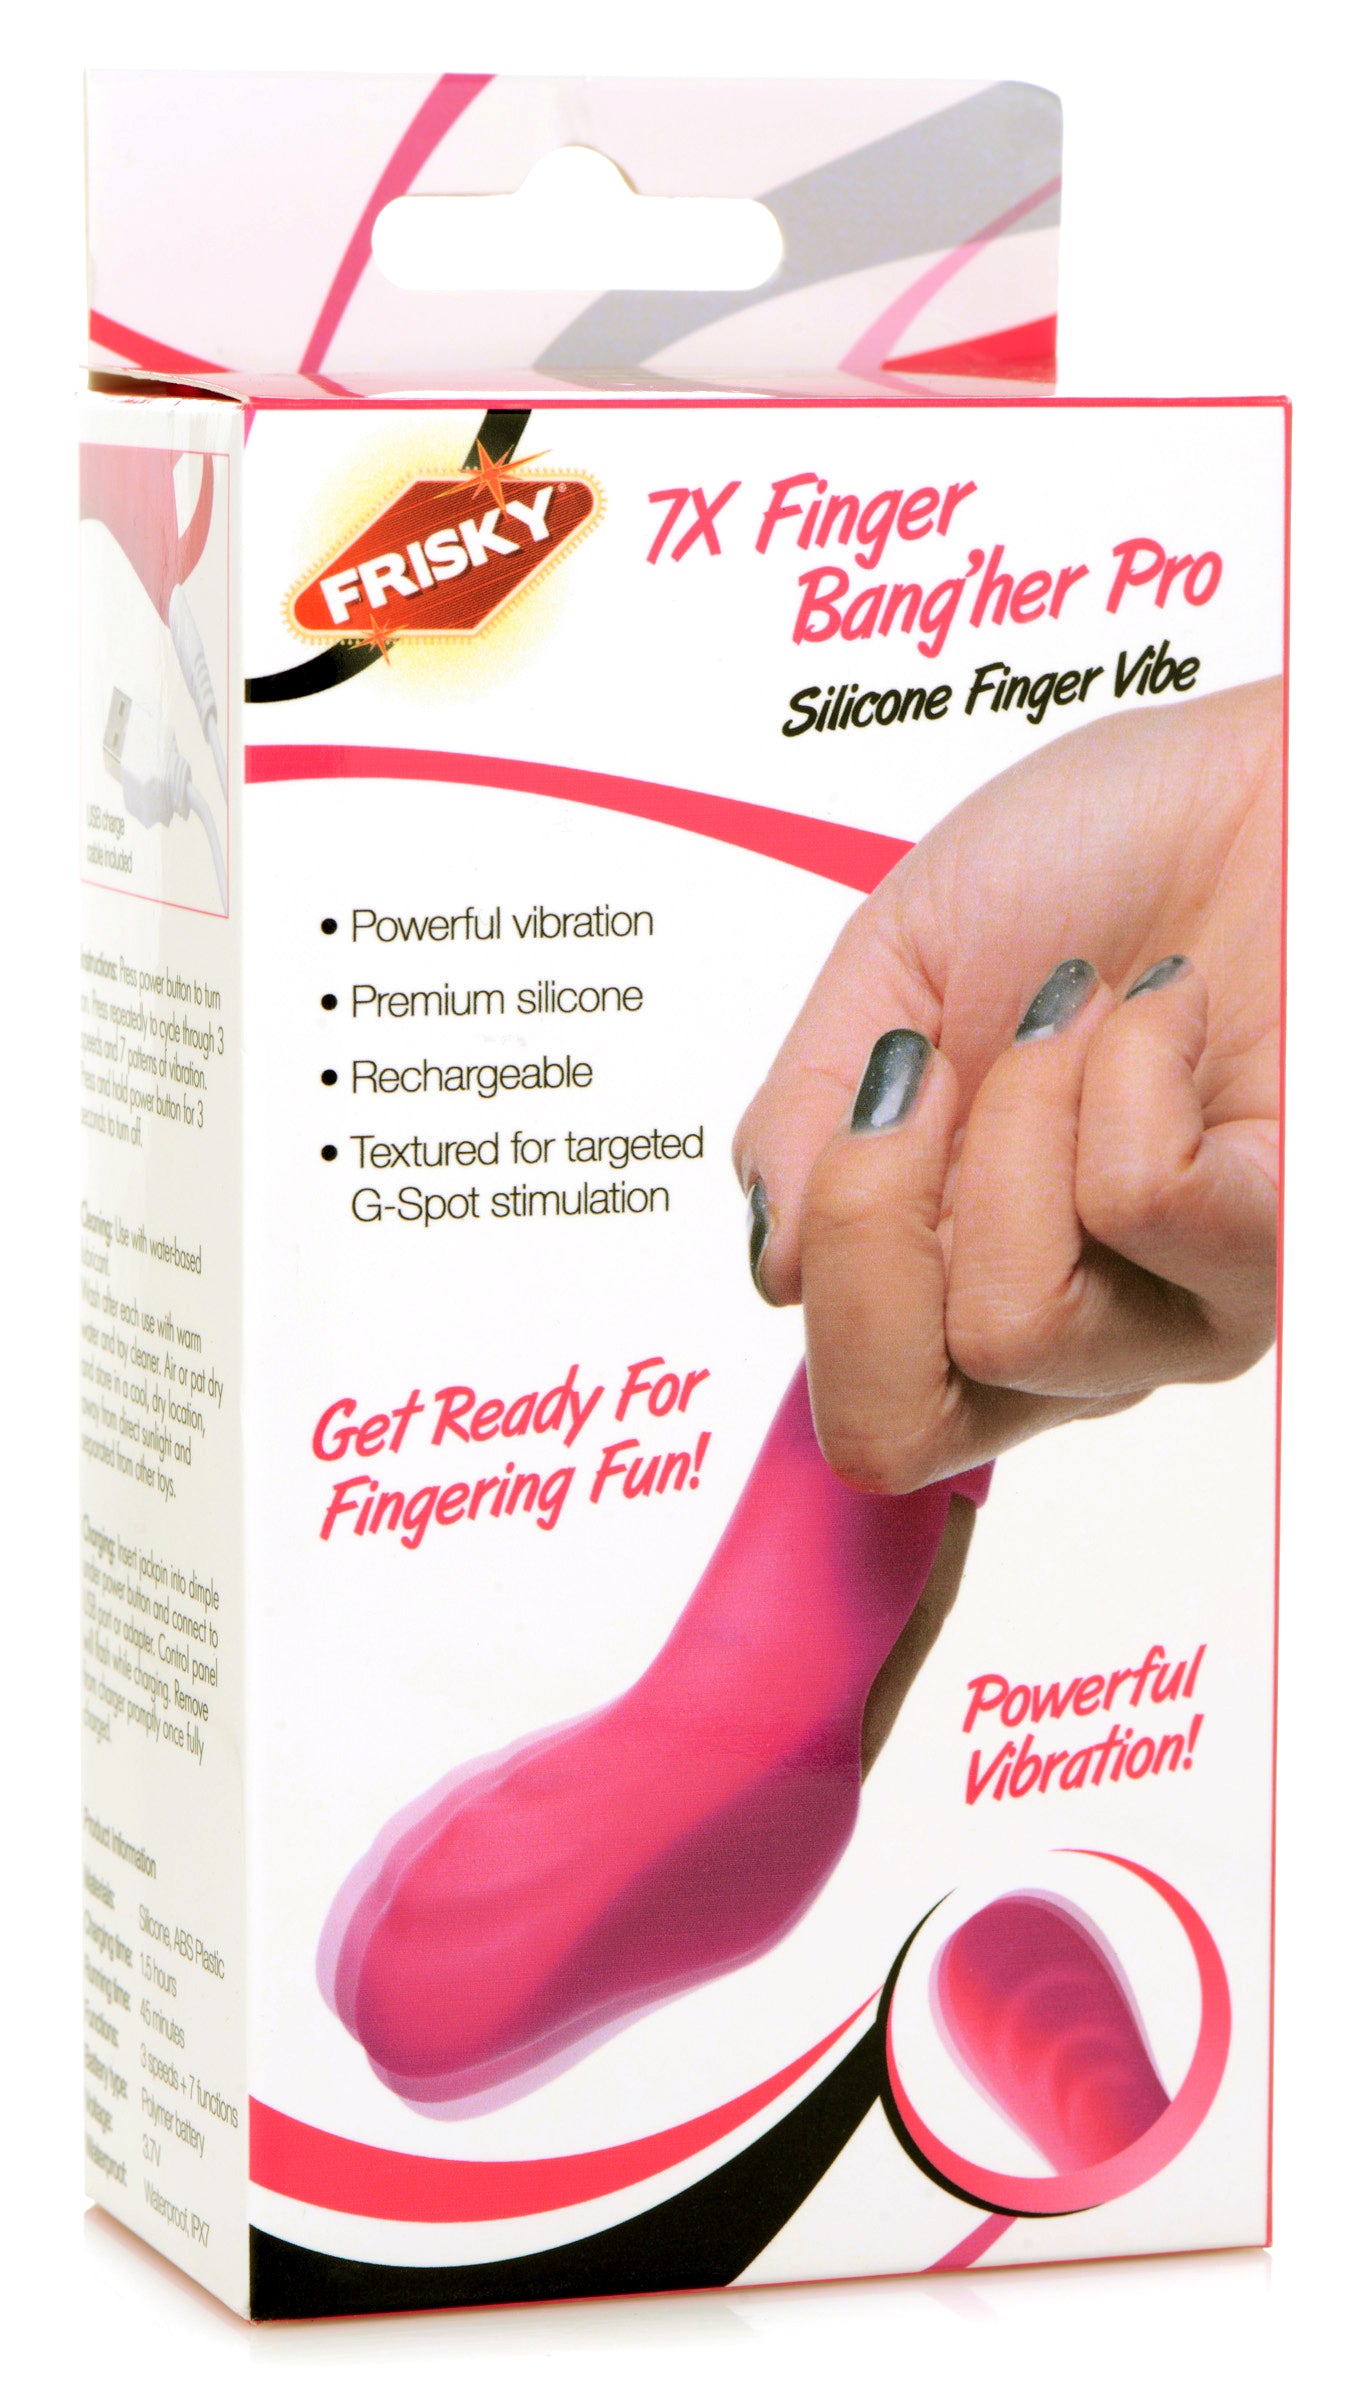 7X Finger Bang Her Pro Silicone Vibrator - Pink - UABDSM